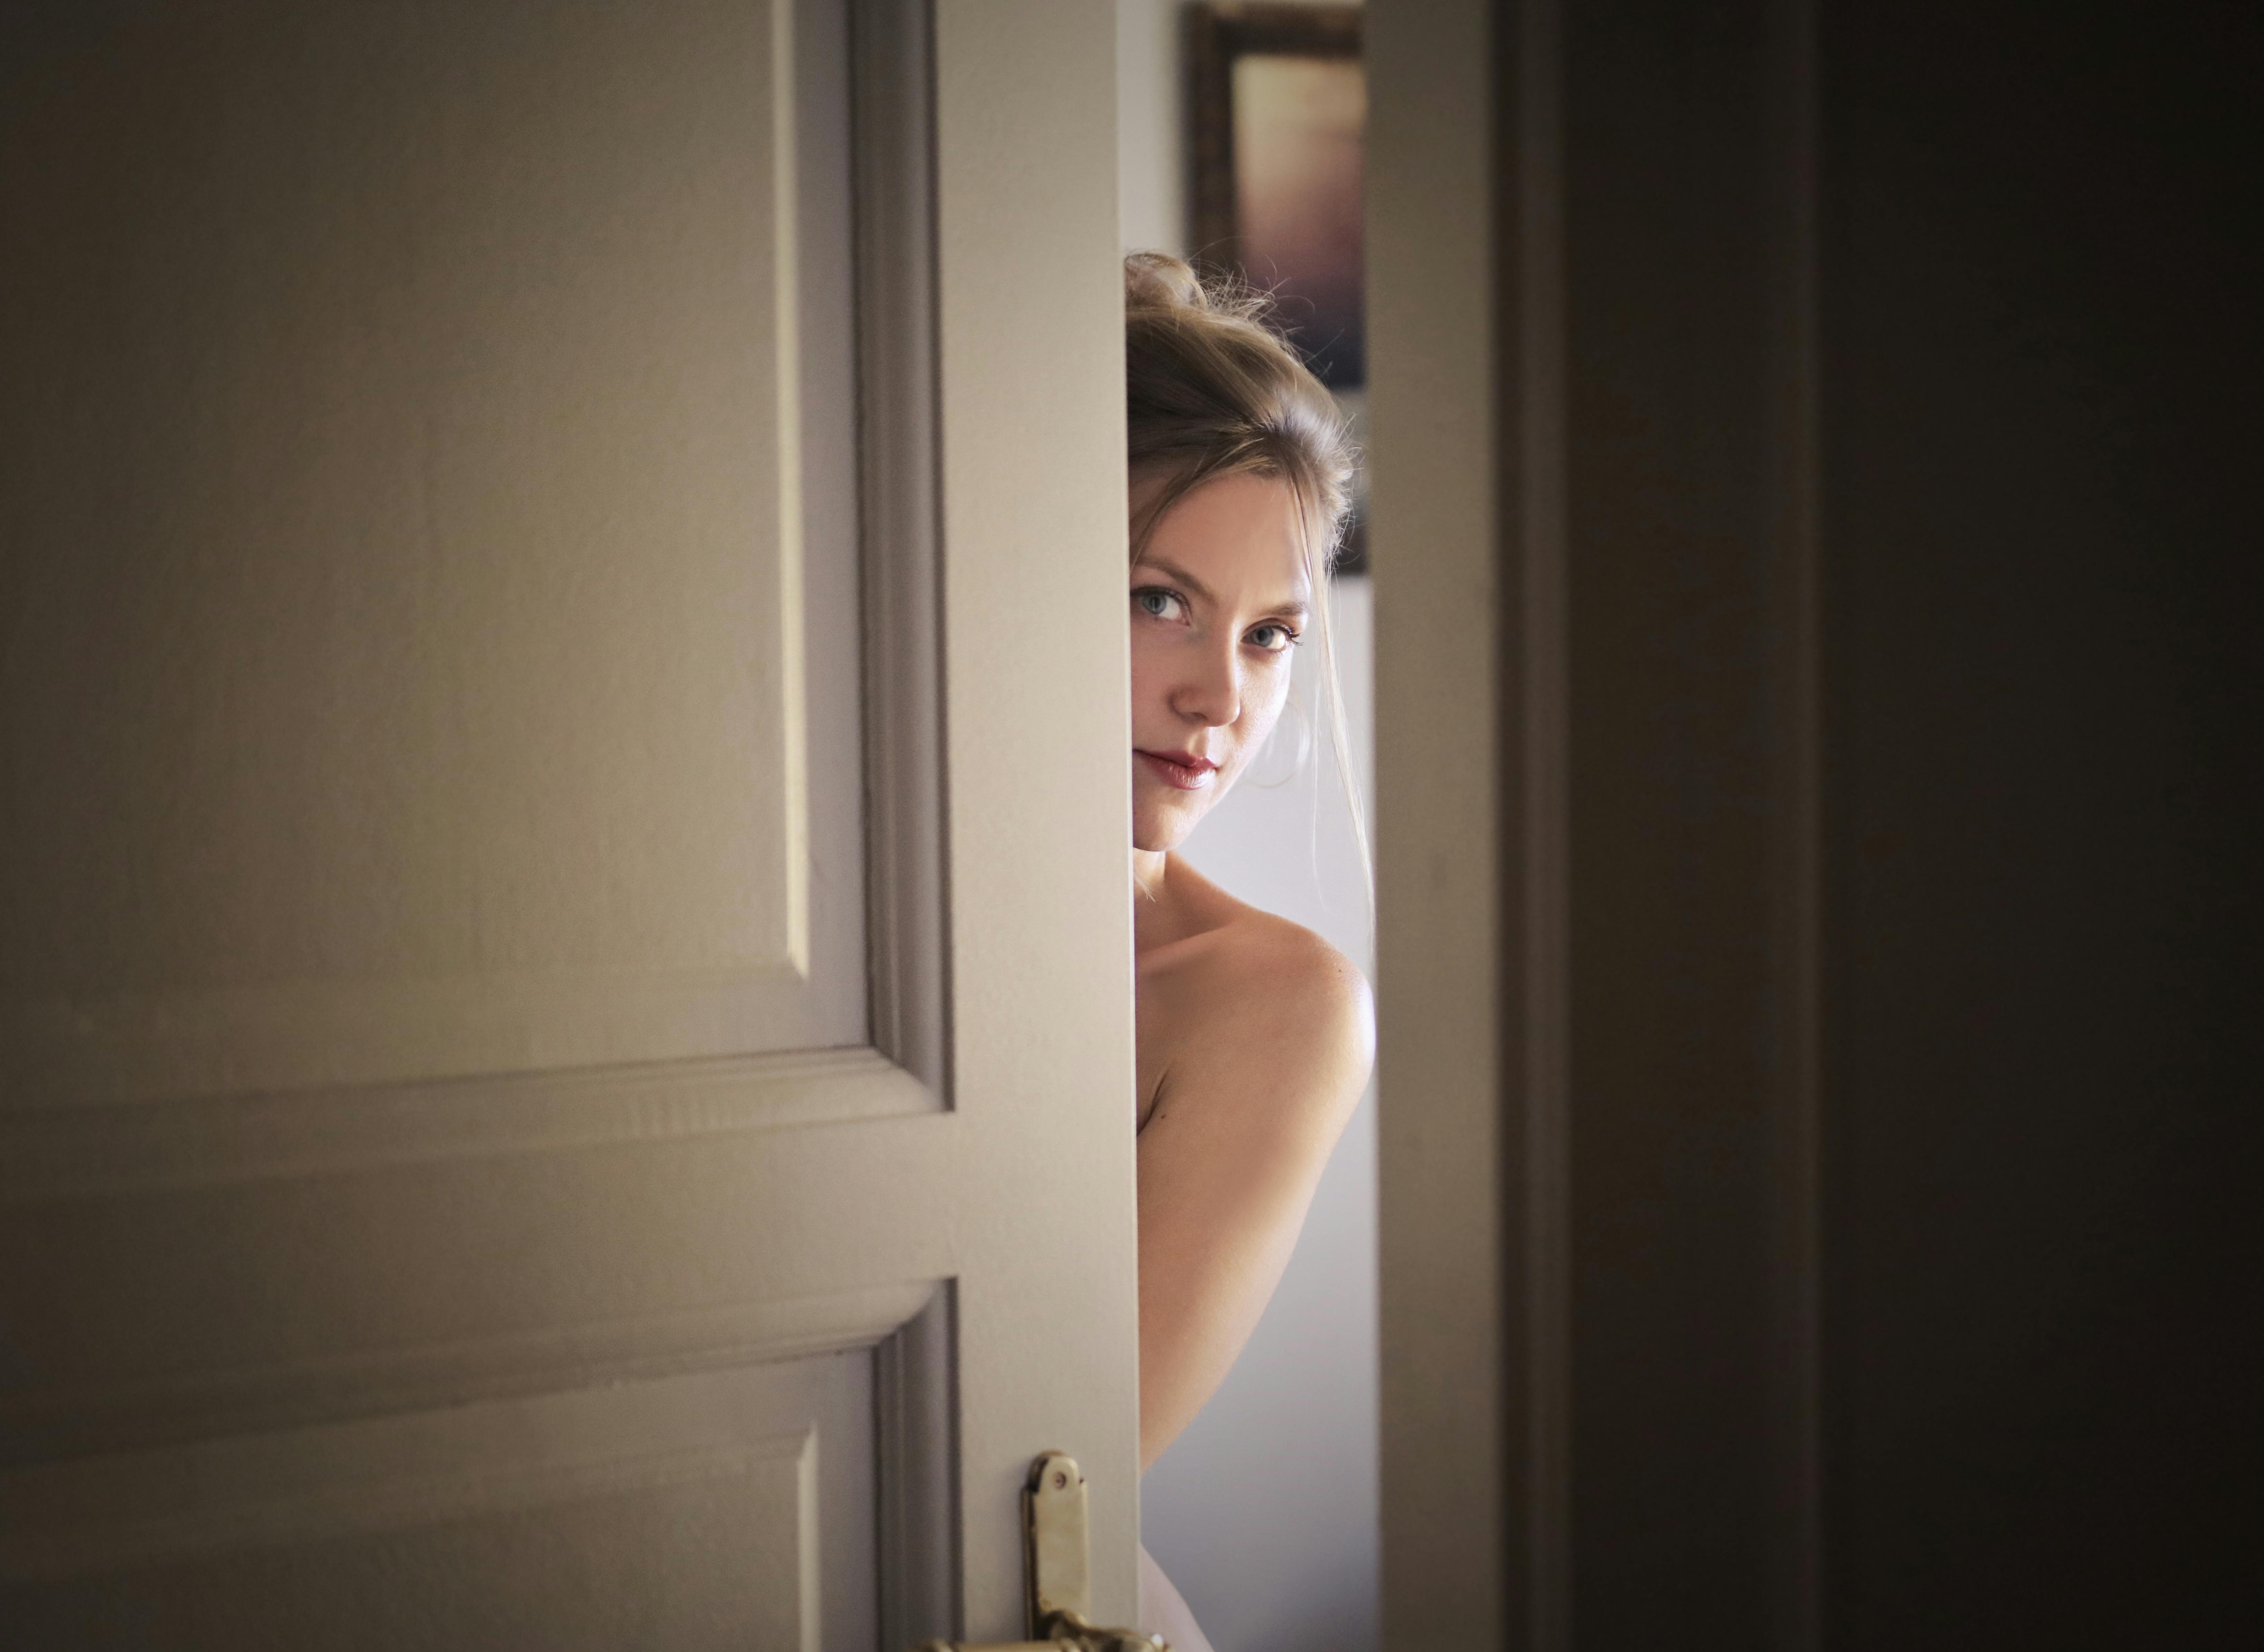 A woman peeking through an open door | Source: Pexels